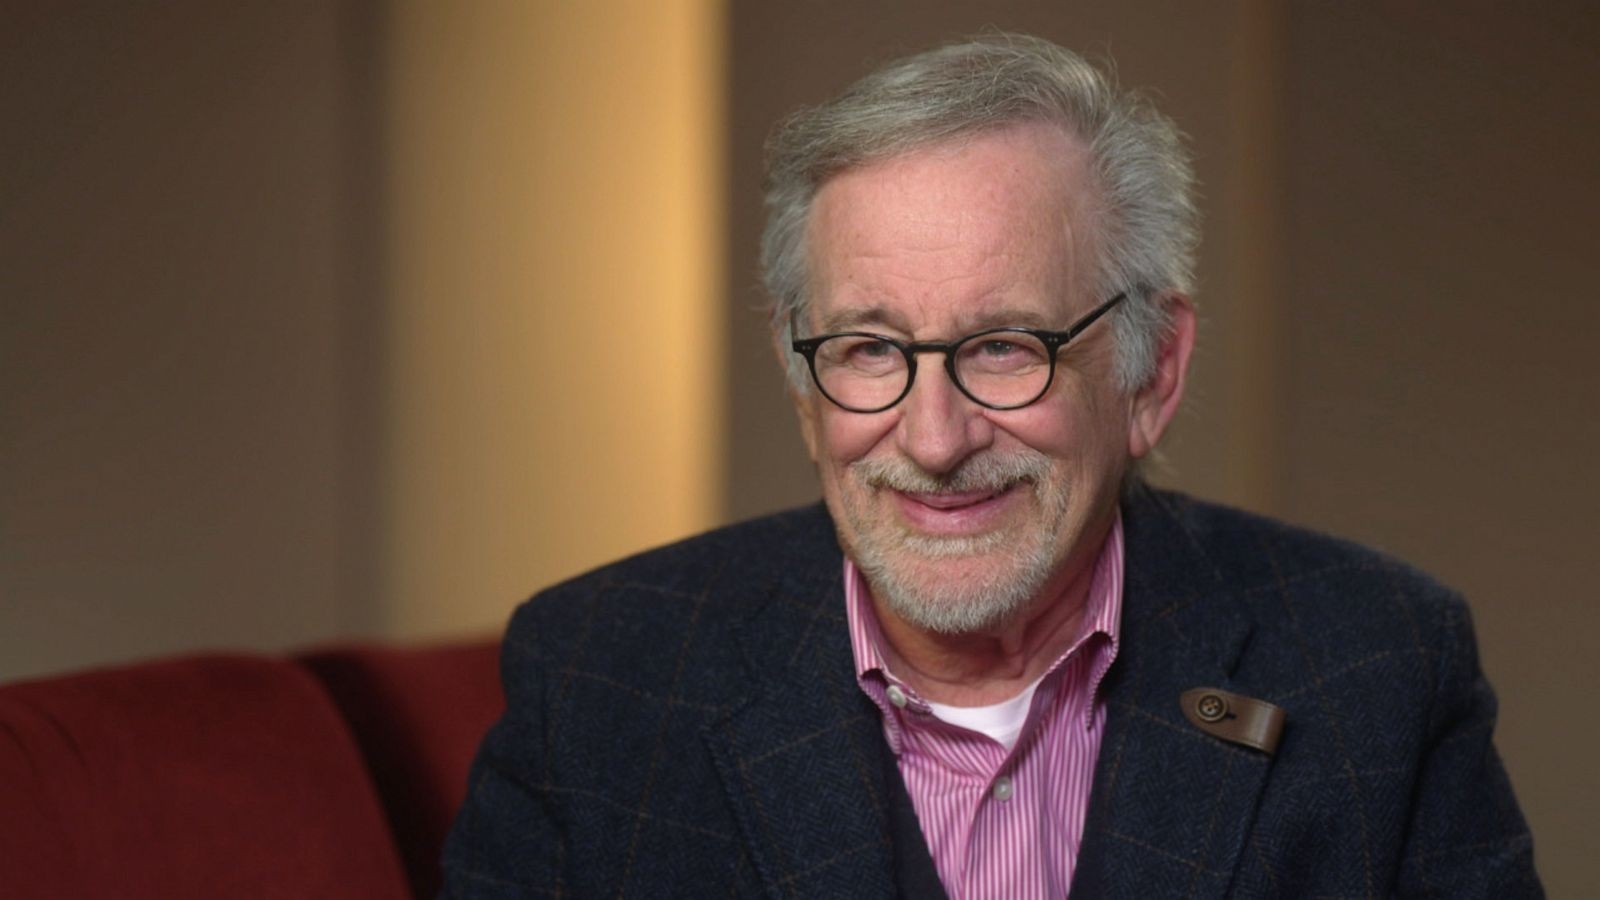 Steven Spielberg in an interview